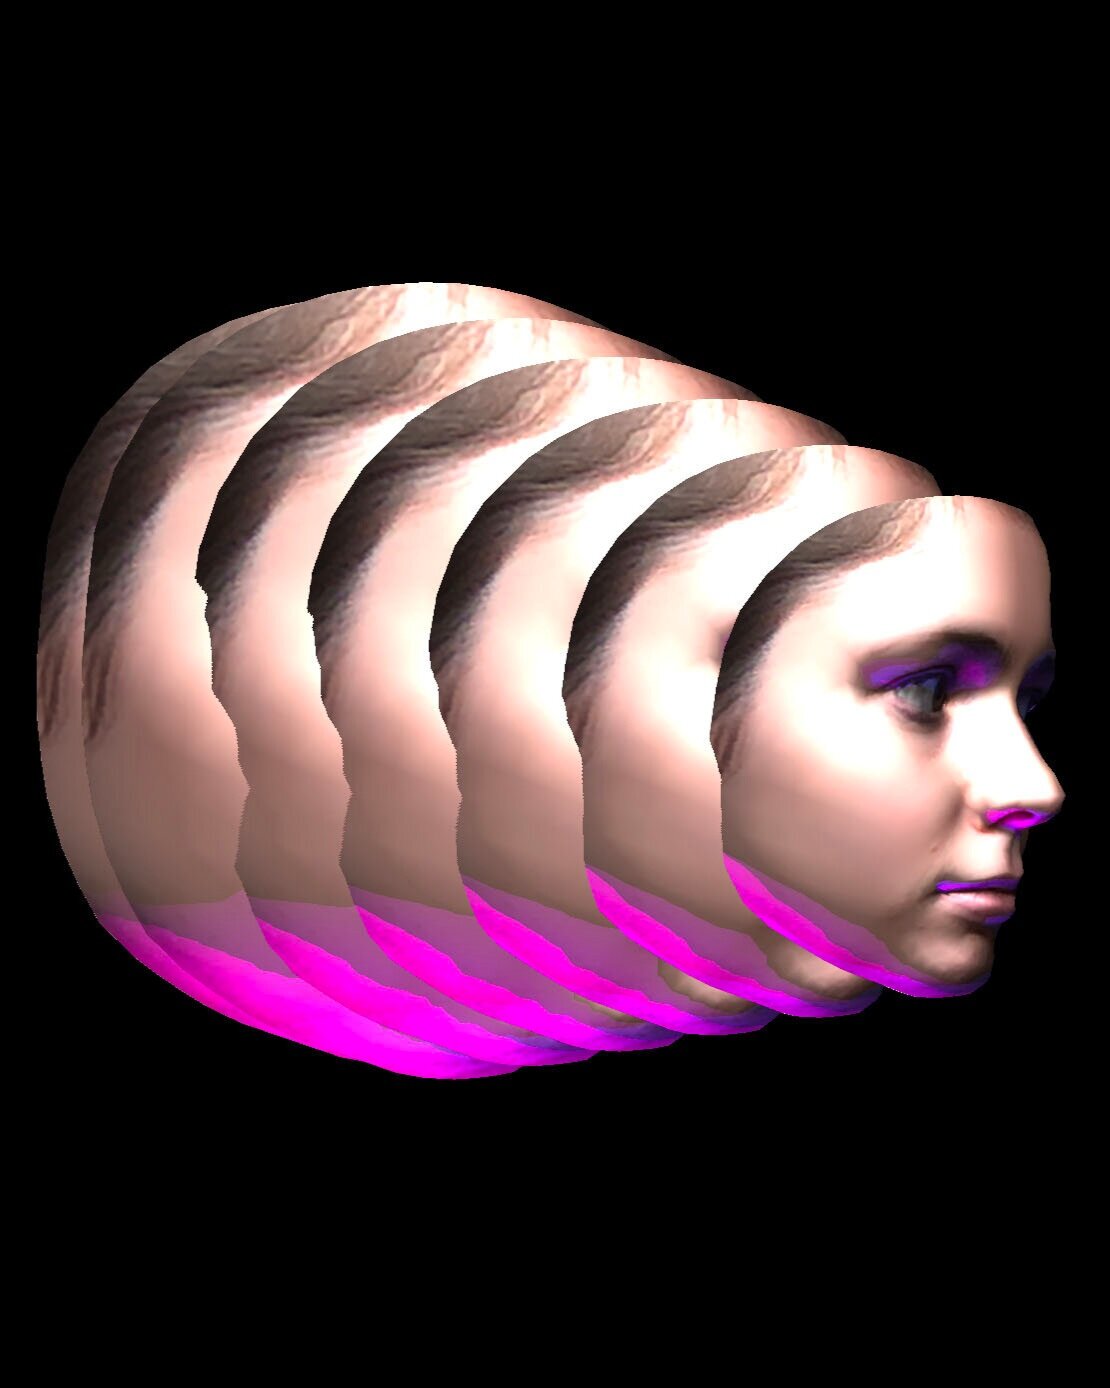  Jess Herrington,  Slinky Face , 2019, augmented reality face filter (available on Instagram @jess.herrington); image courtesy the artist 